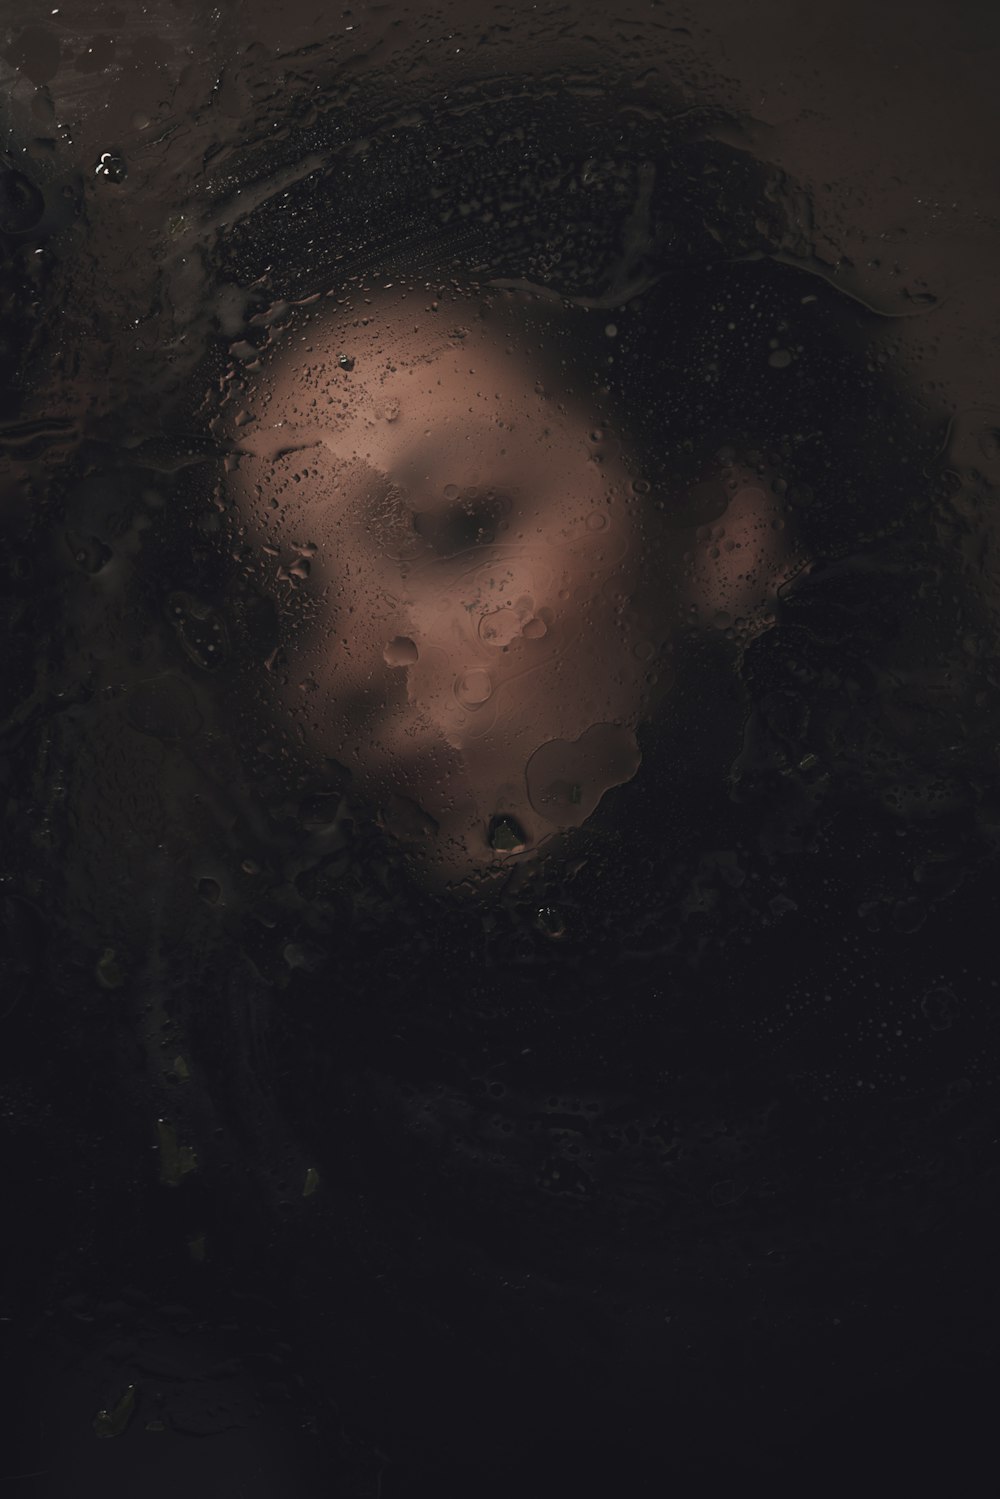 La cara de una mujer se ve a través de una ventana cubierta de lluvia